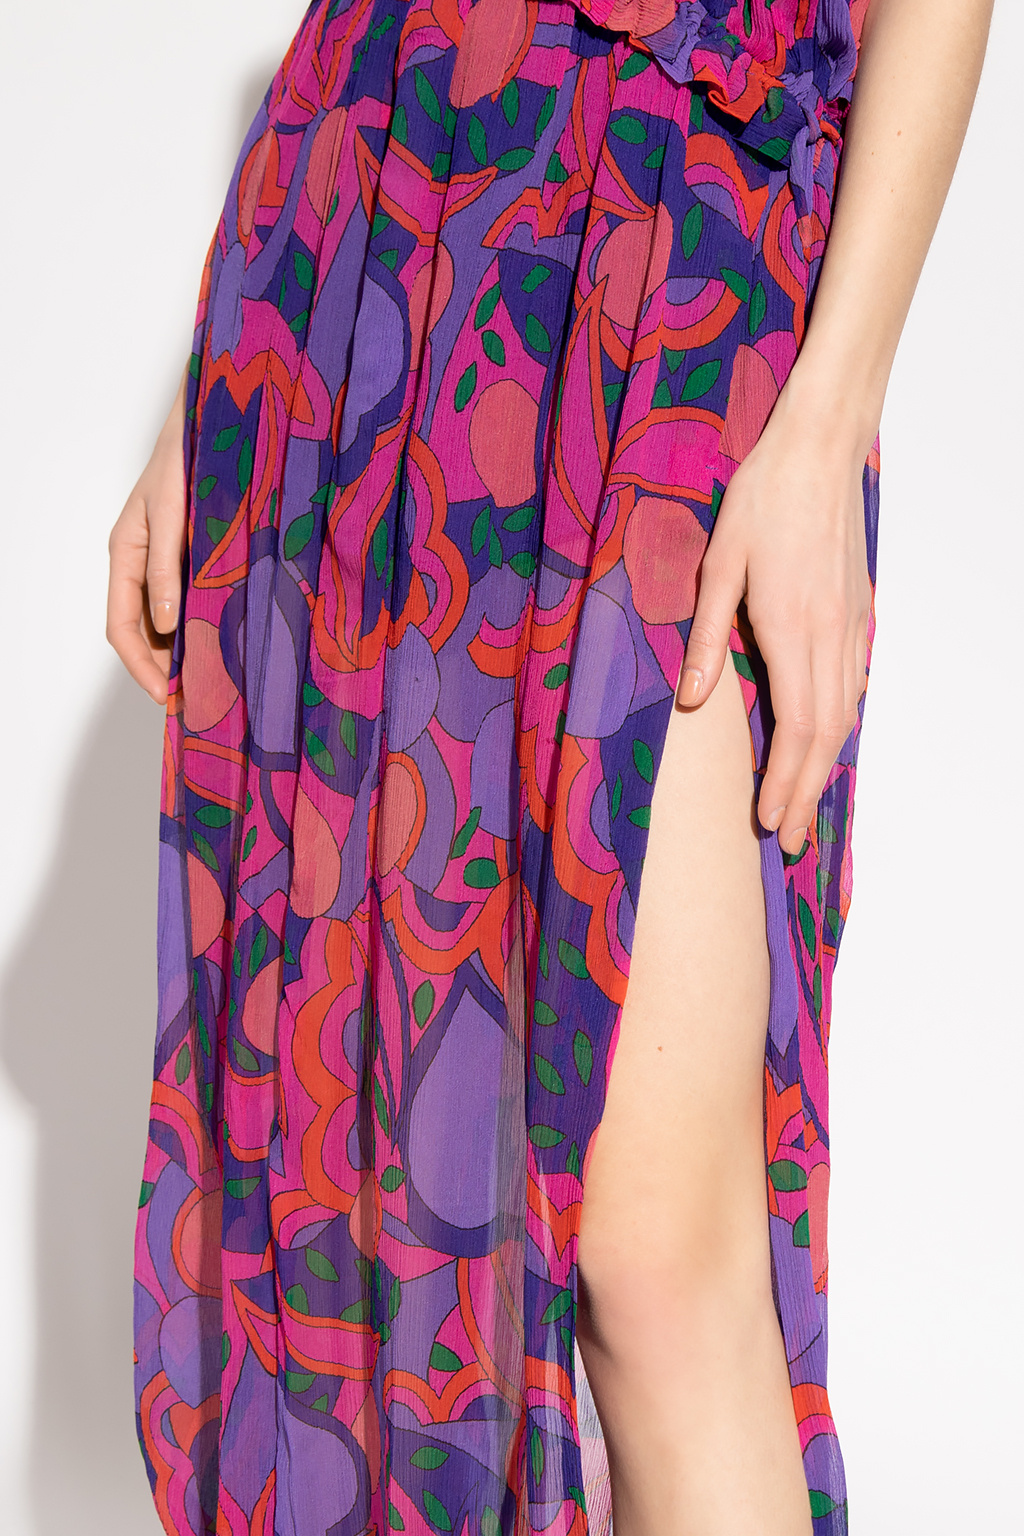 Isabel Marant ‘Alsaw’ patterned Farm dress